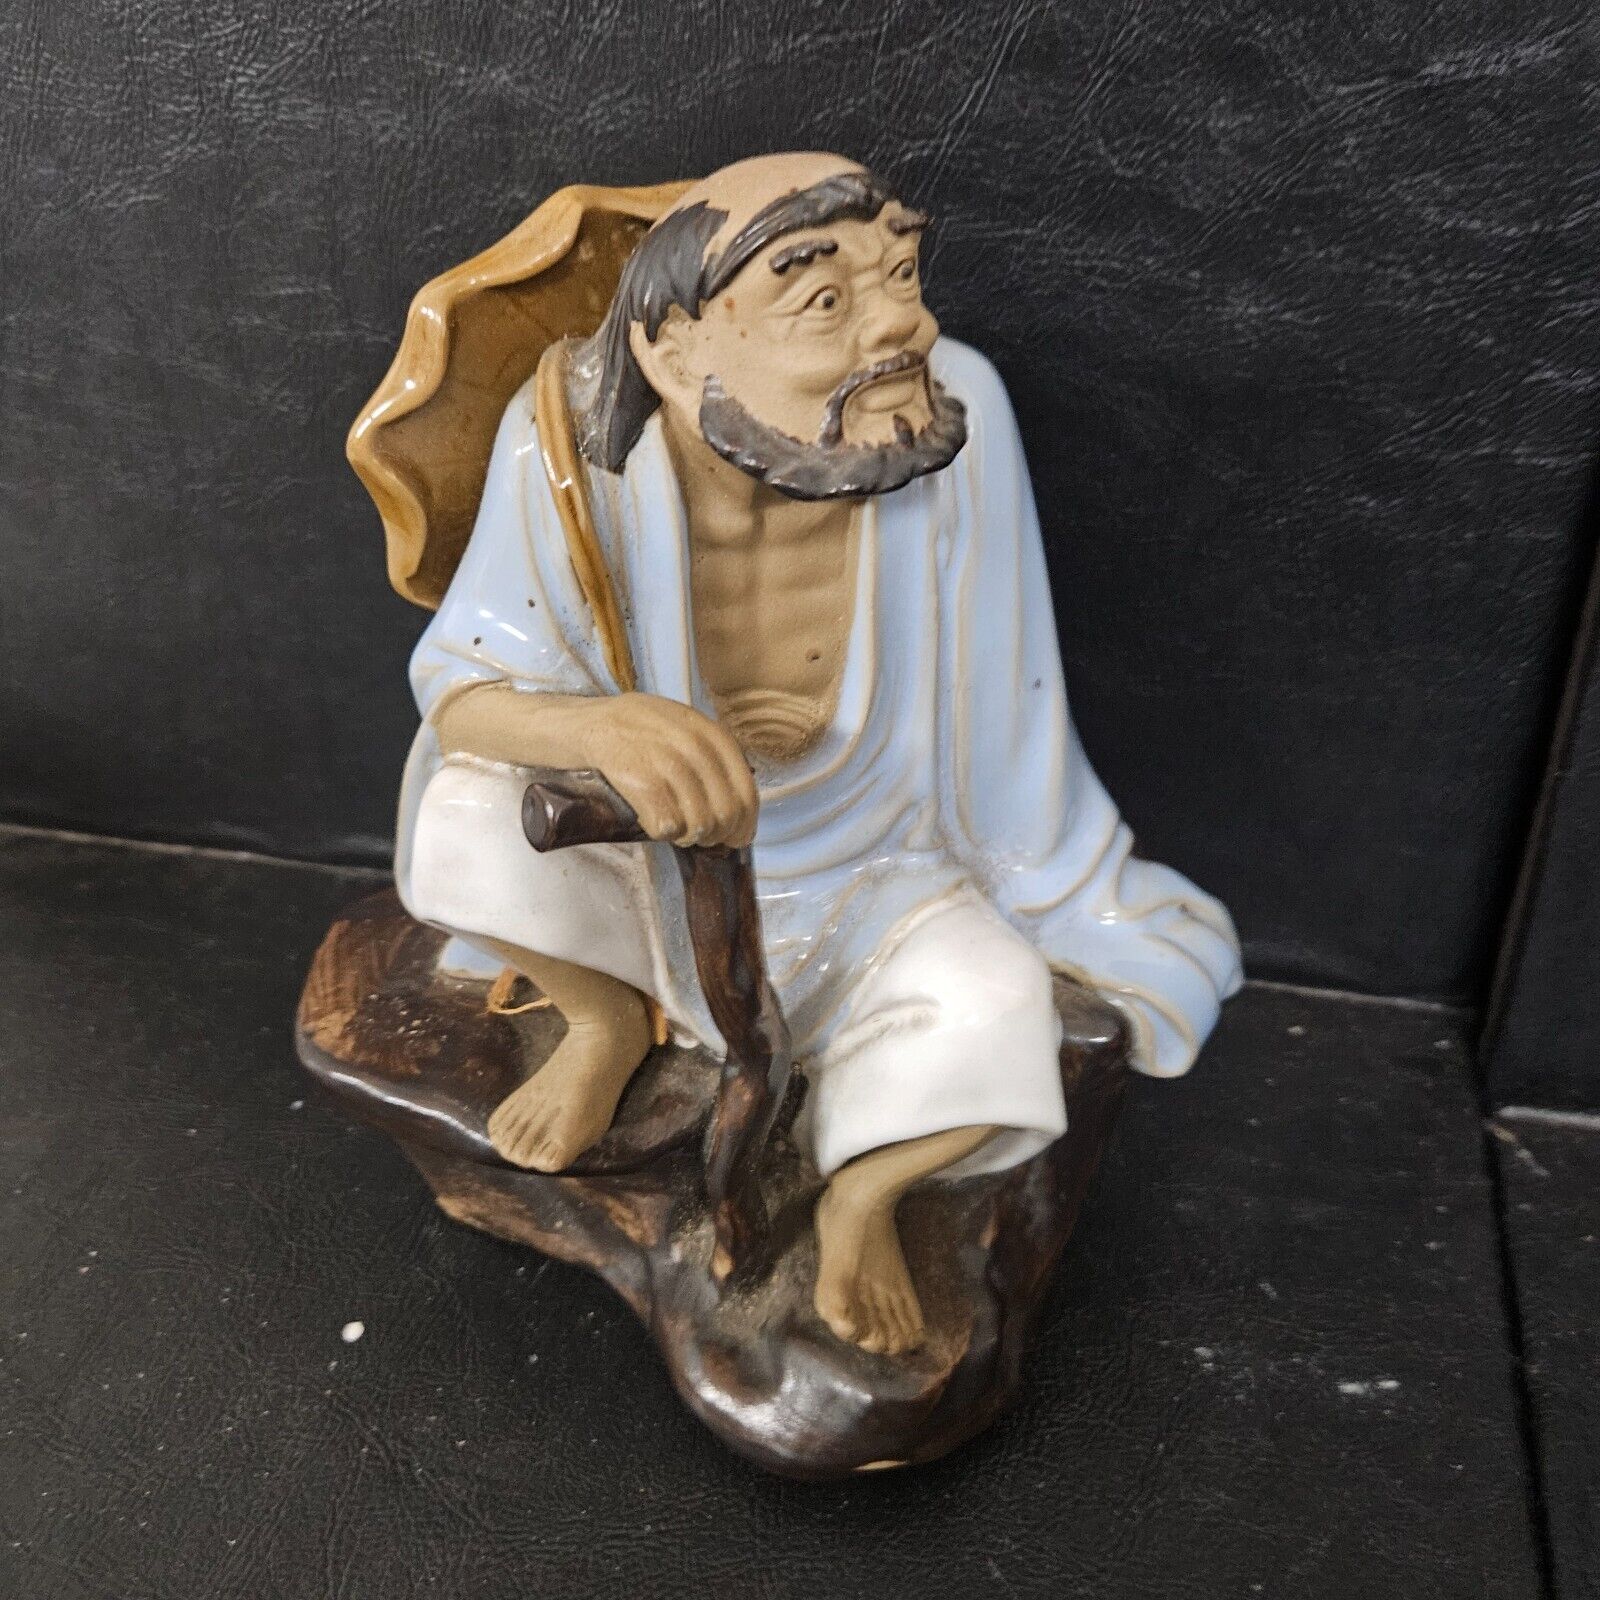 Chinese Mud Man figure figurine